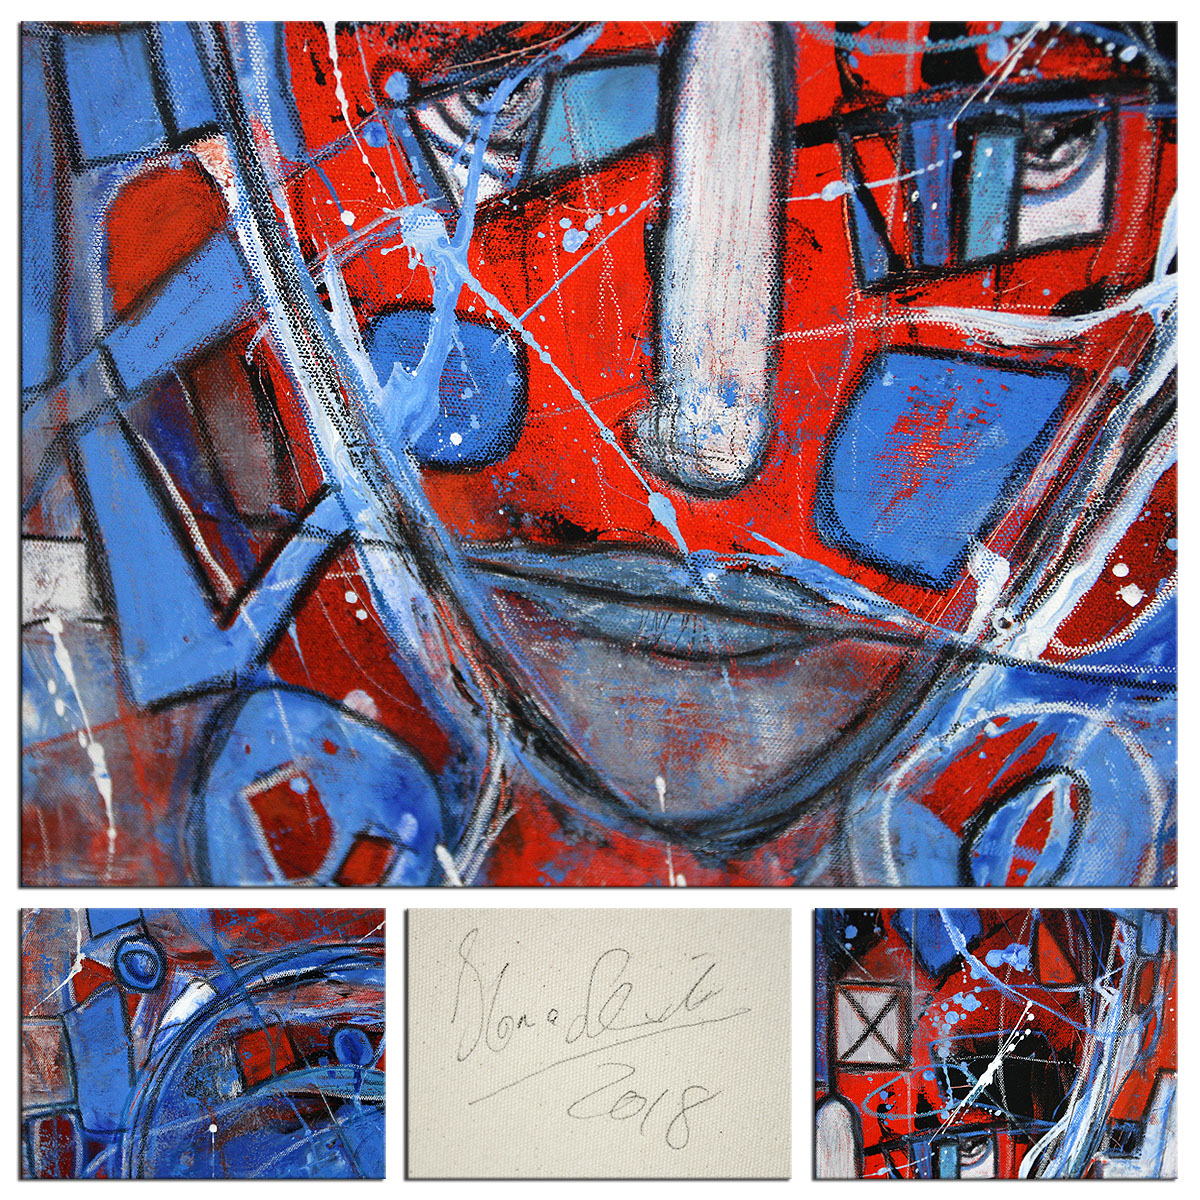 Expressive Acrylmalerei, I. Schmidt: "Fragmentiert"